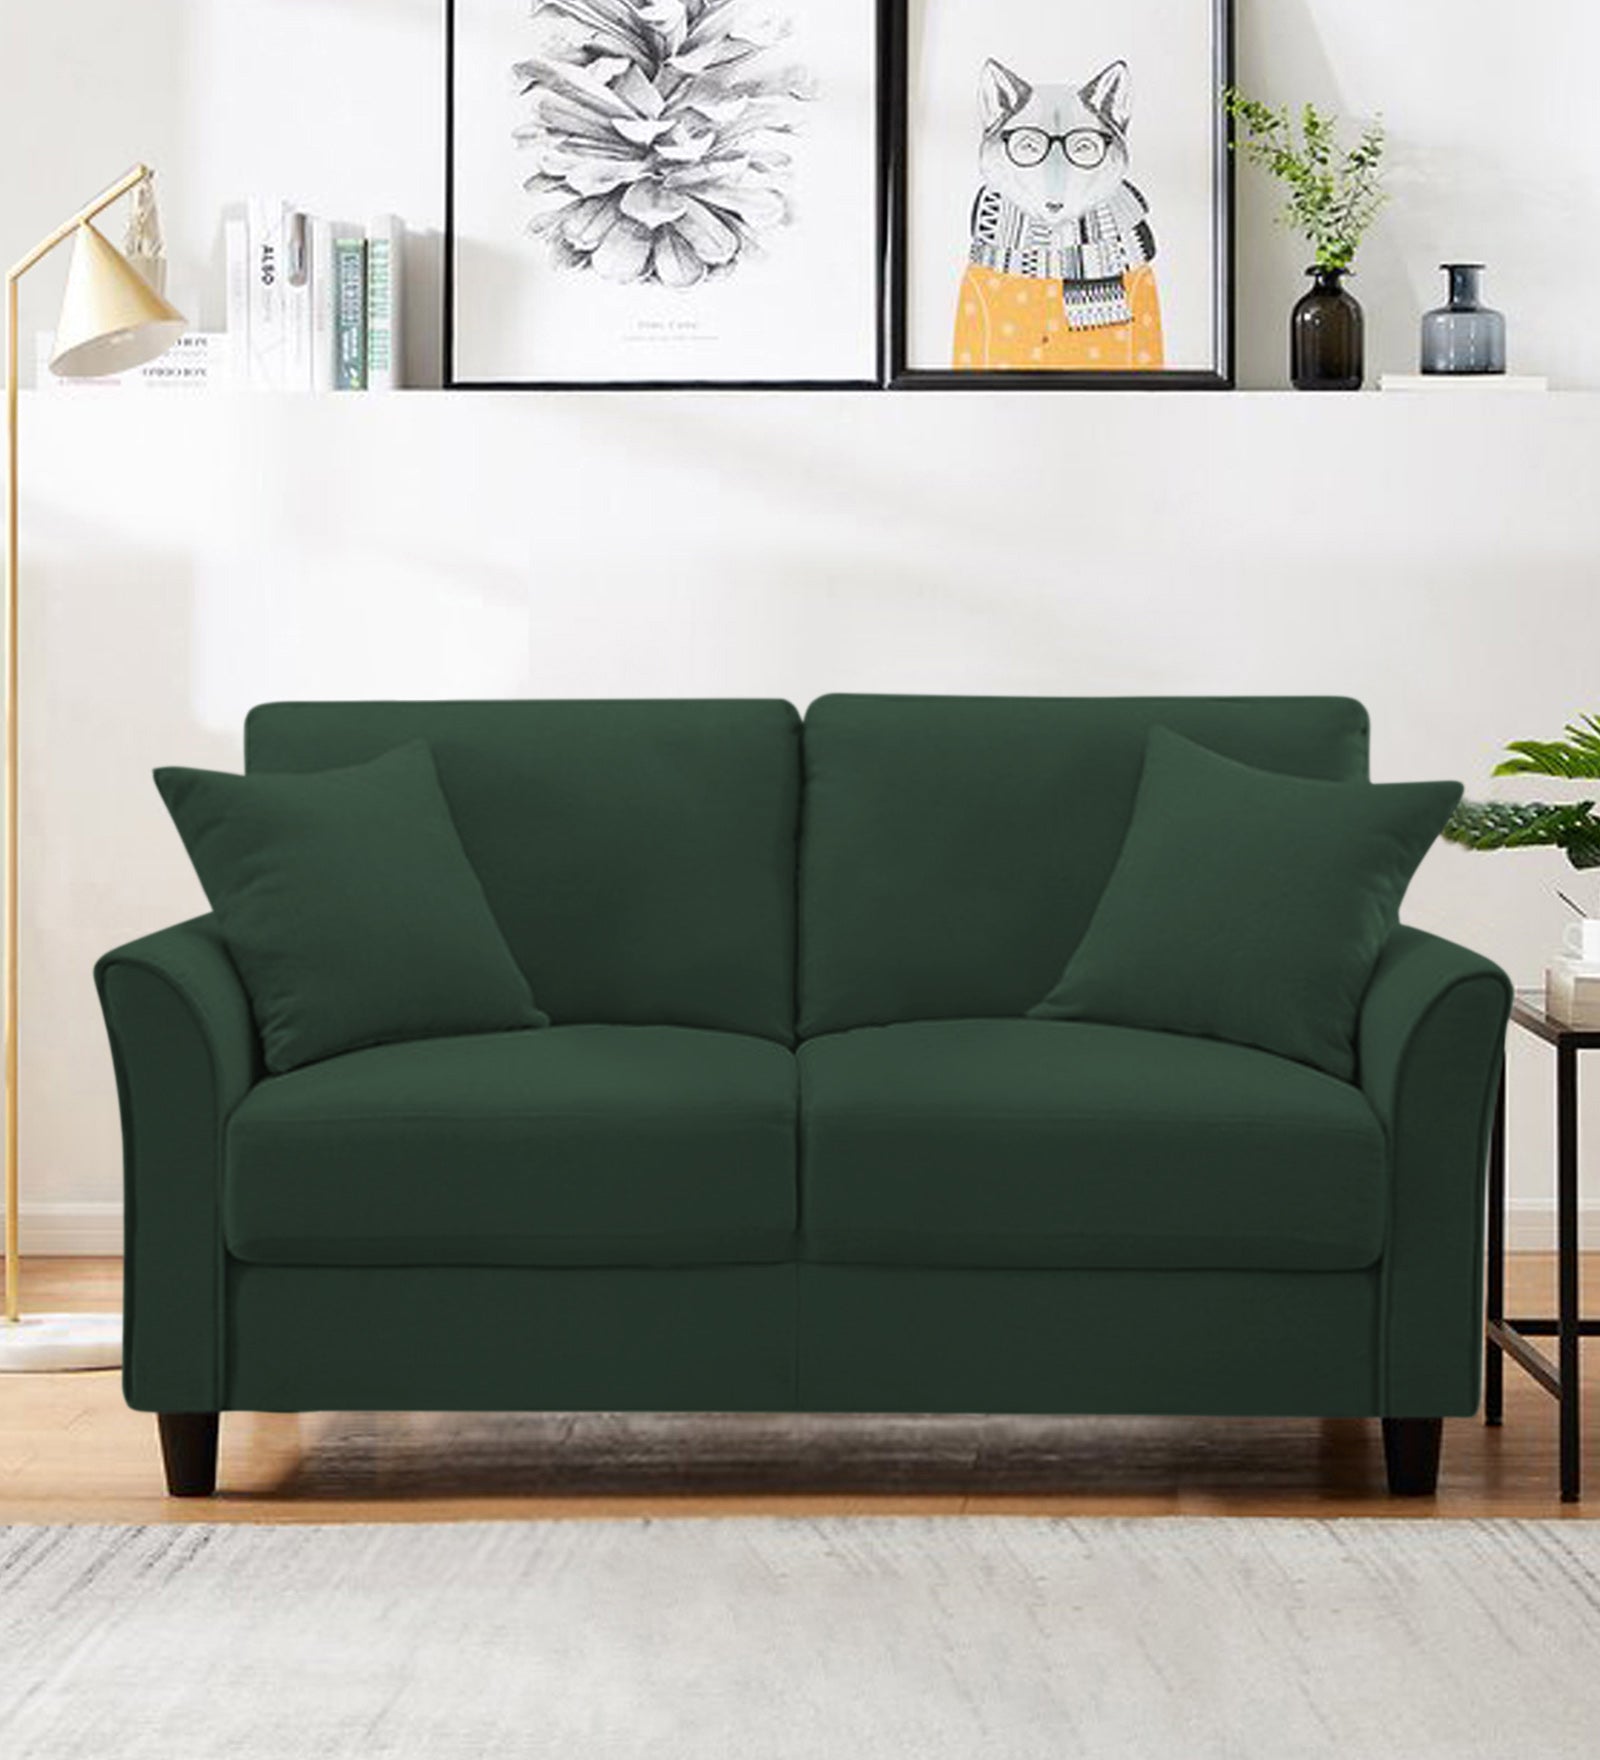 Daroo Velvet 2 Seater Sofa In Amazon Green Colour